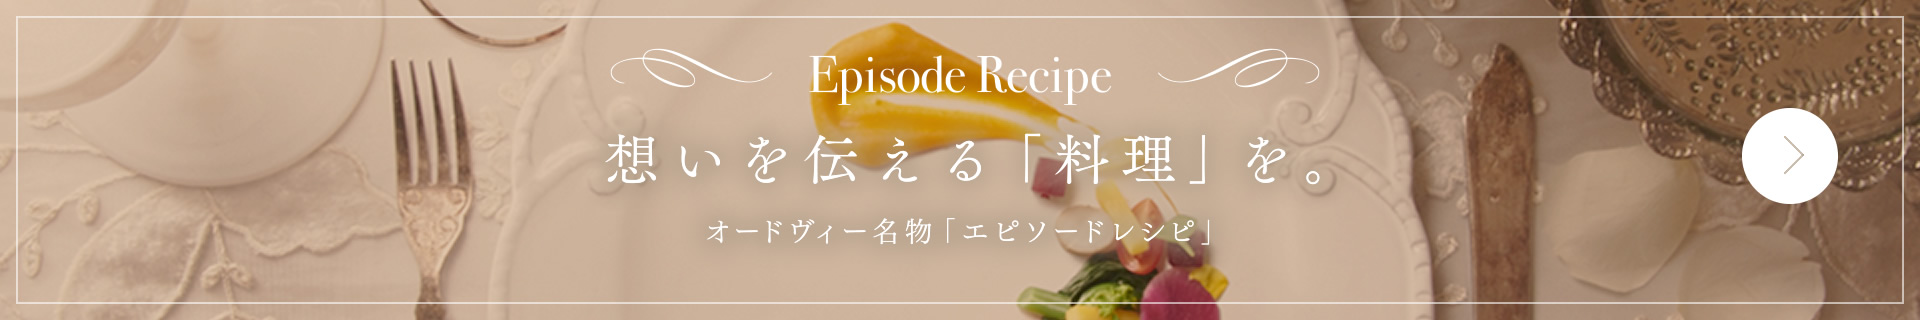 Episode Recipe│想いを伝える「料理」を。